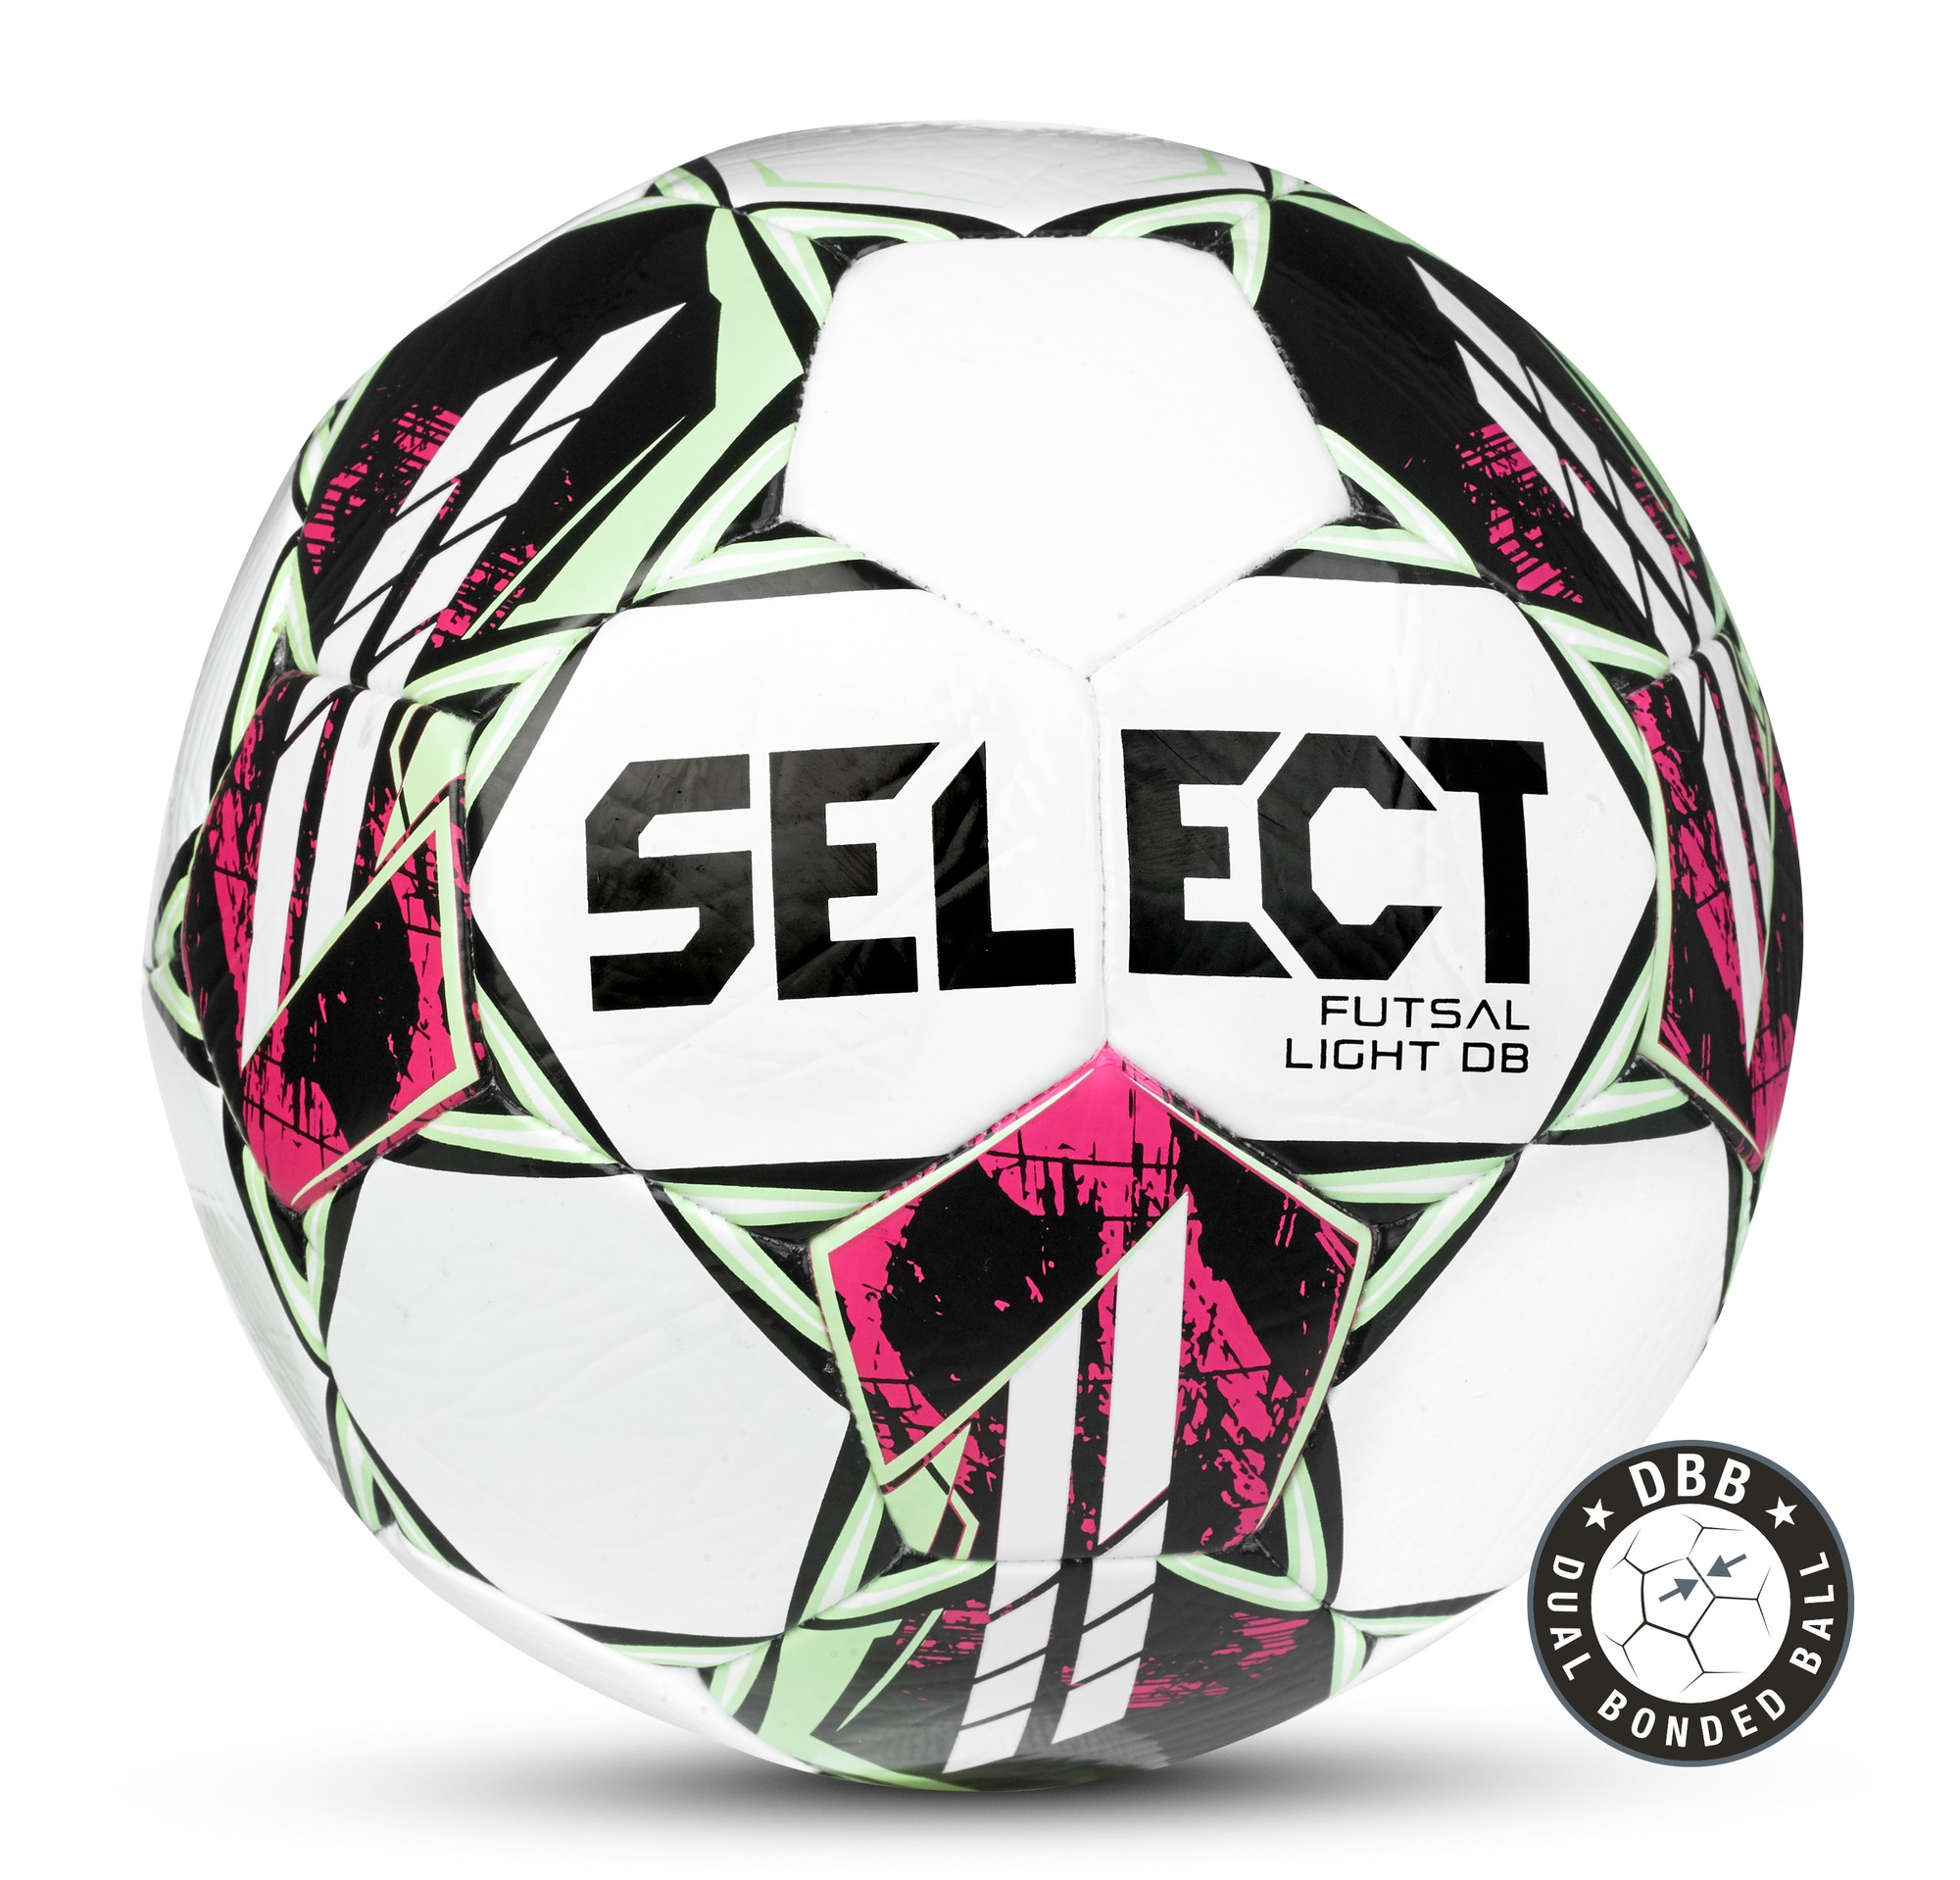 Футзальный мяч Select Futsal Light DB v22 1061460004 2000_1918